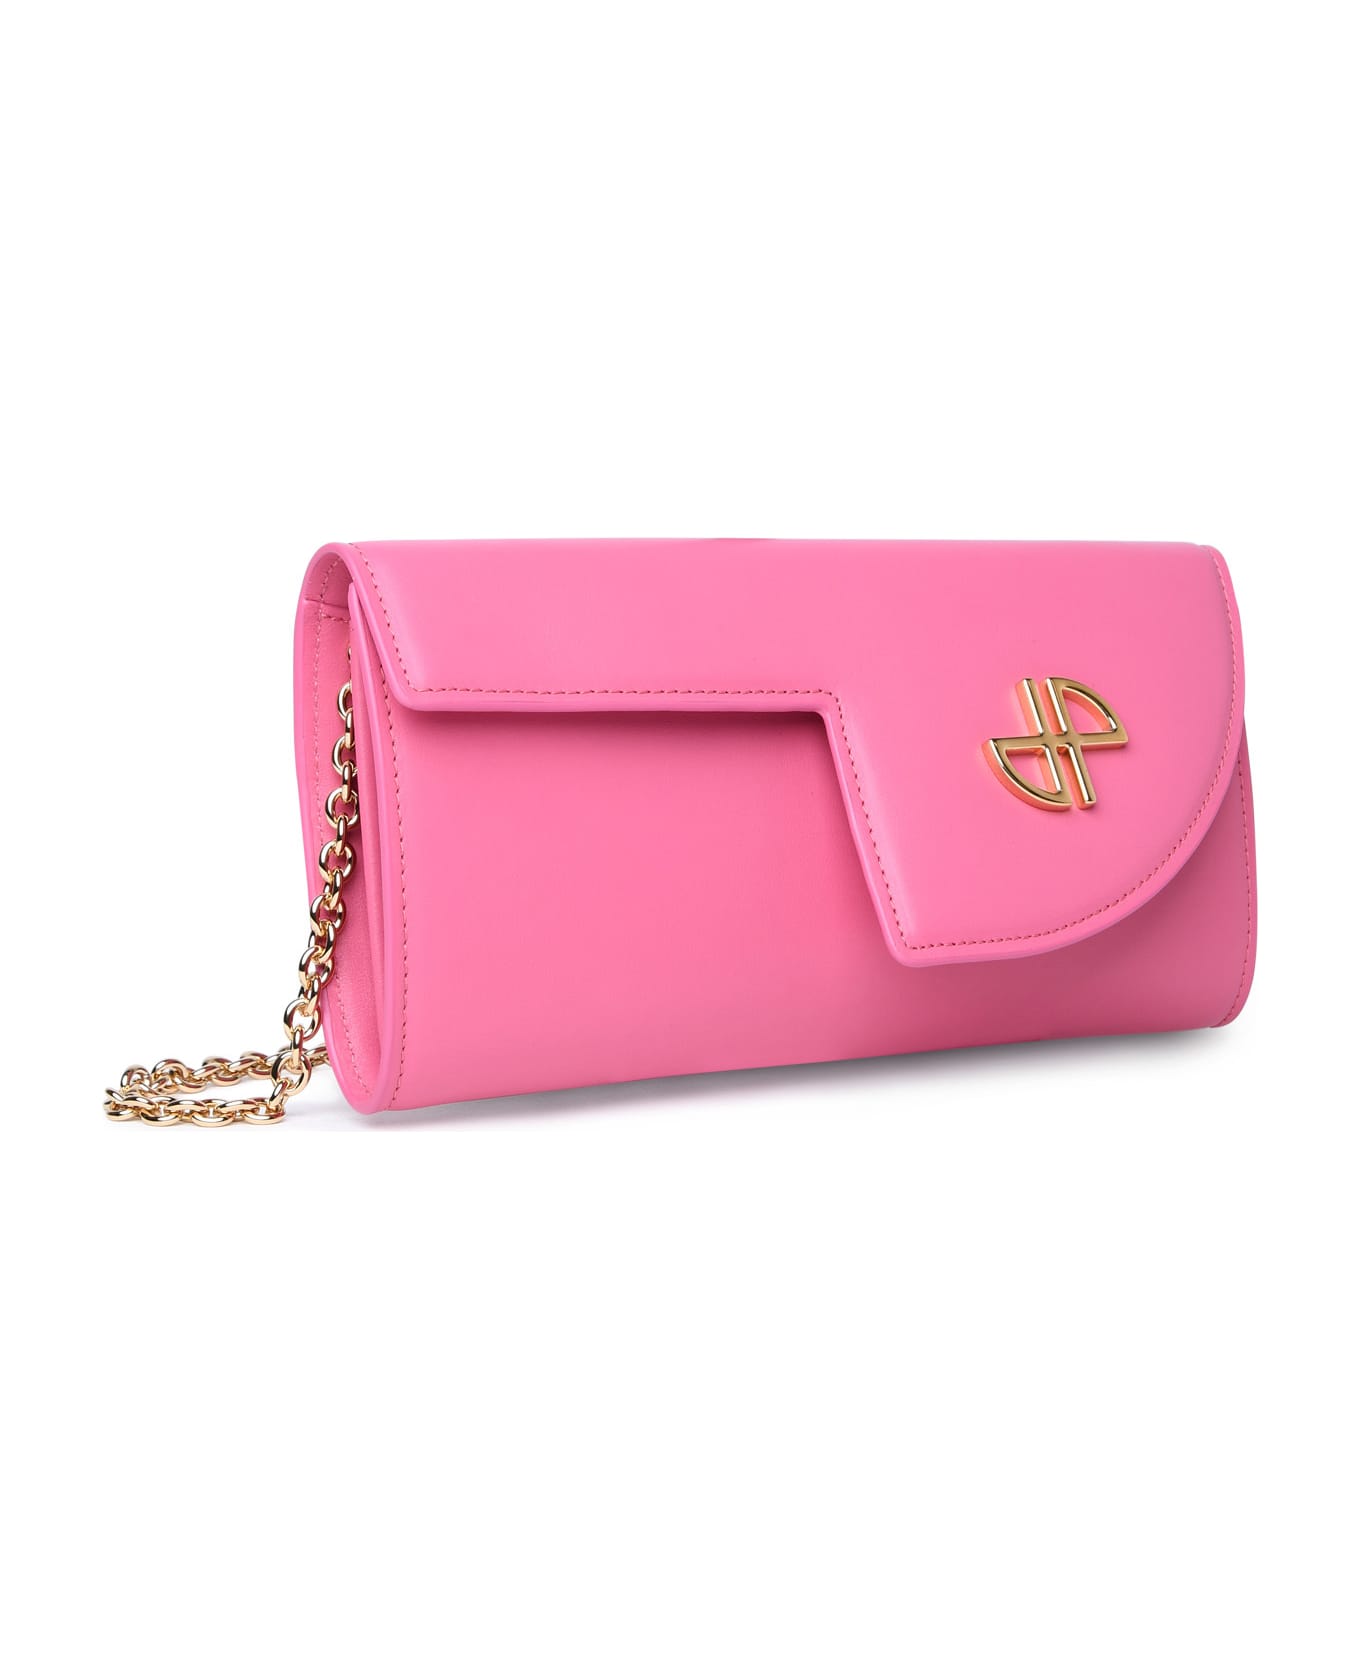 Patou 'jp' Pink Leather Crossbody Bag - Pink